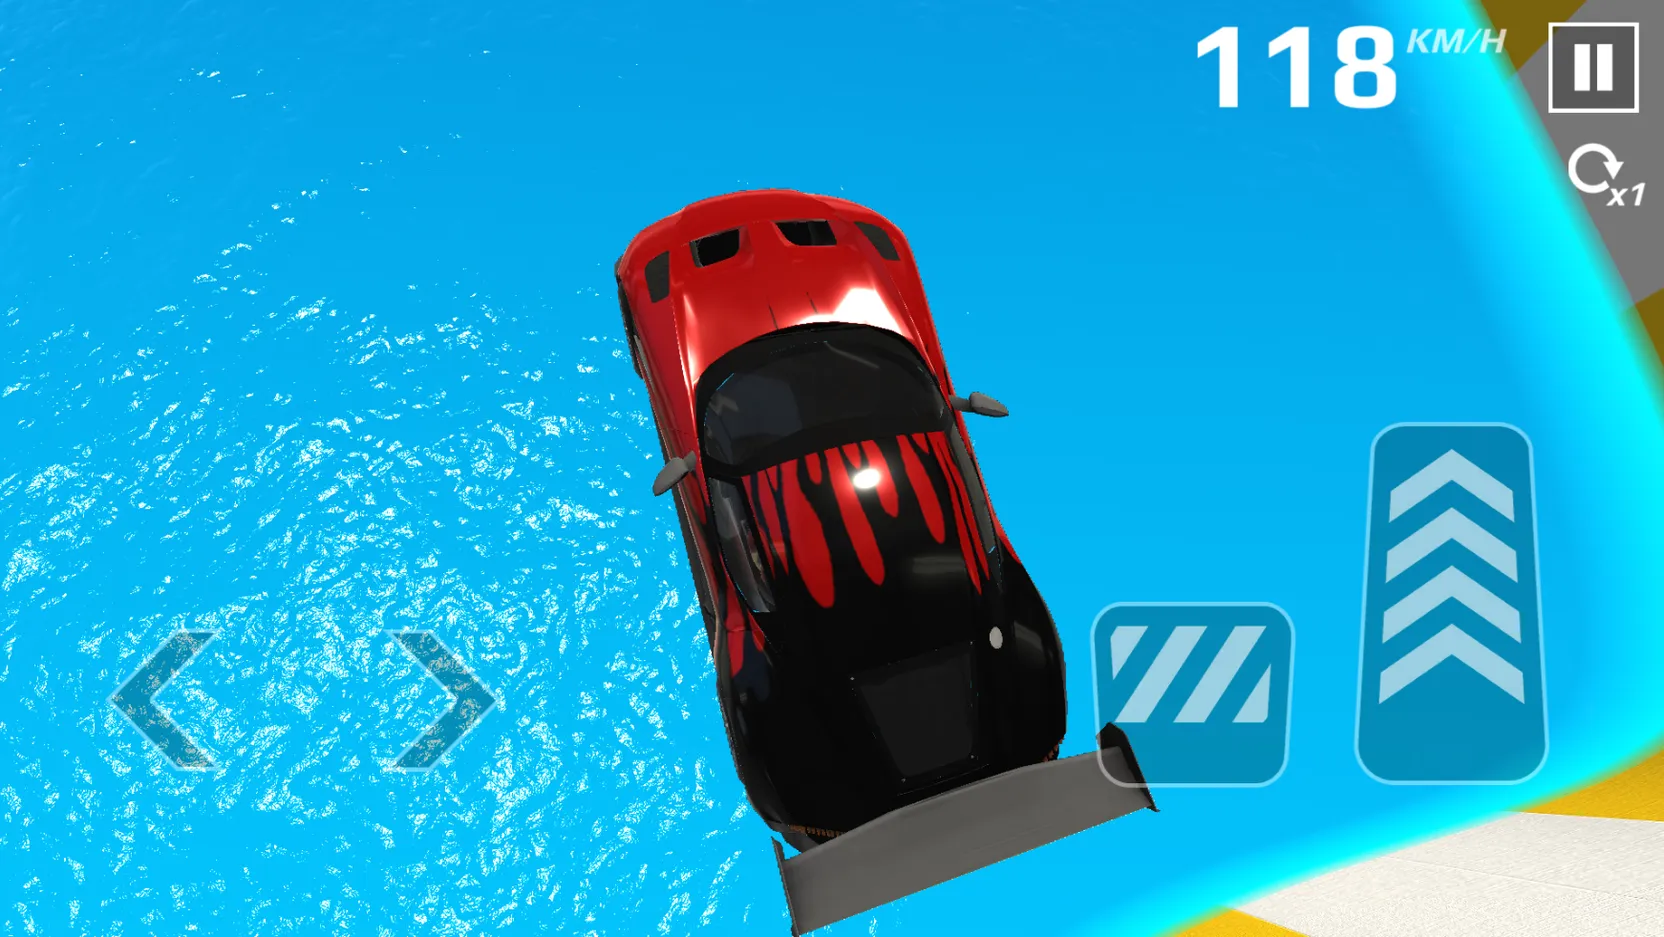 GT Car Stunt Master 3D para Android - Baixe o APK na Uptodown